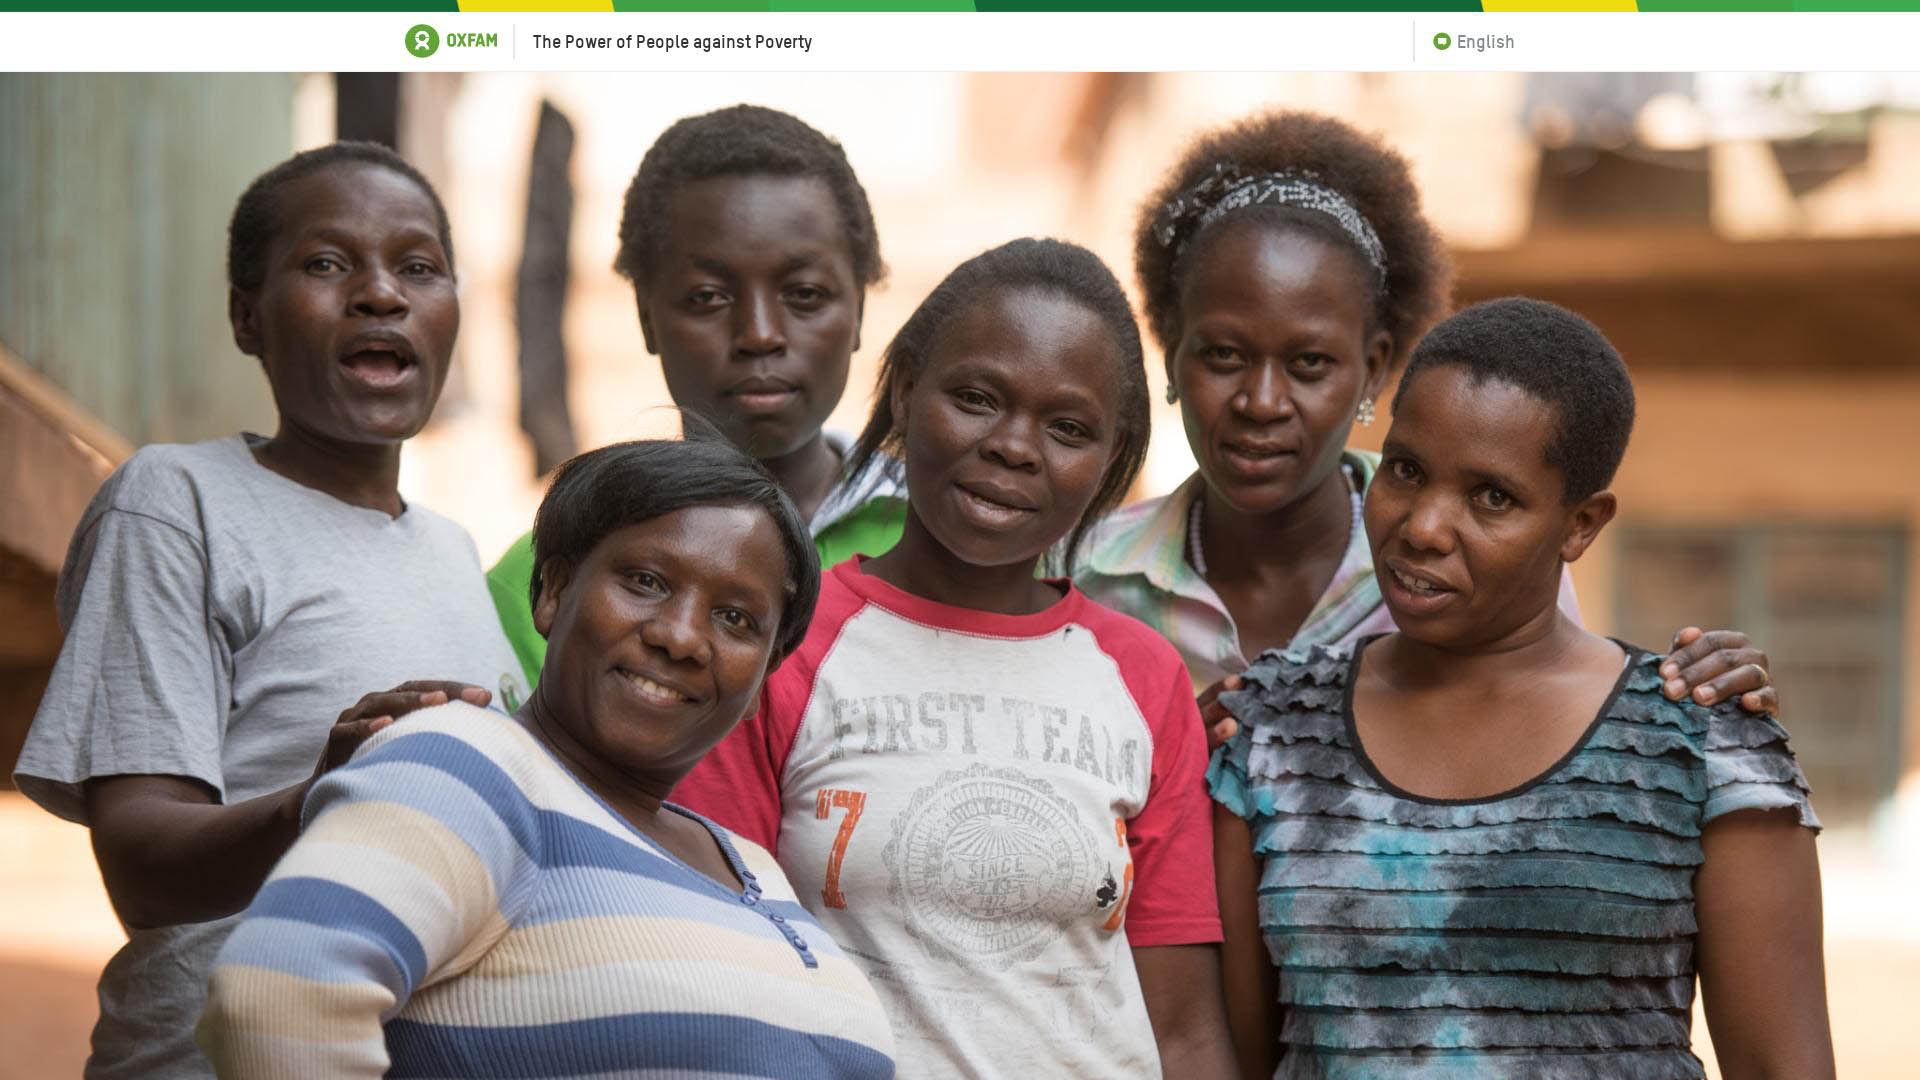 Oxfam Homepage Screenshot